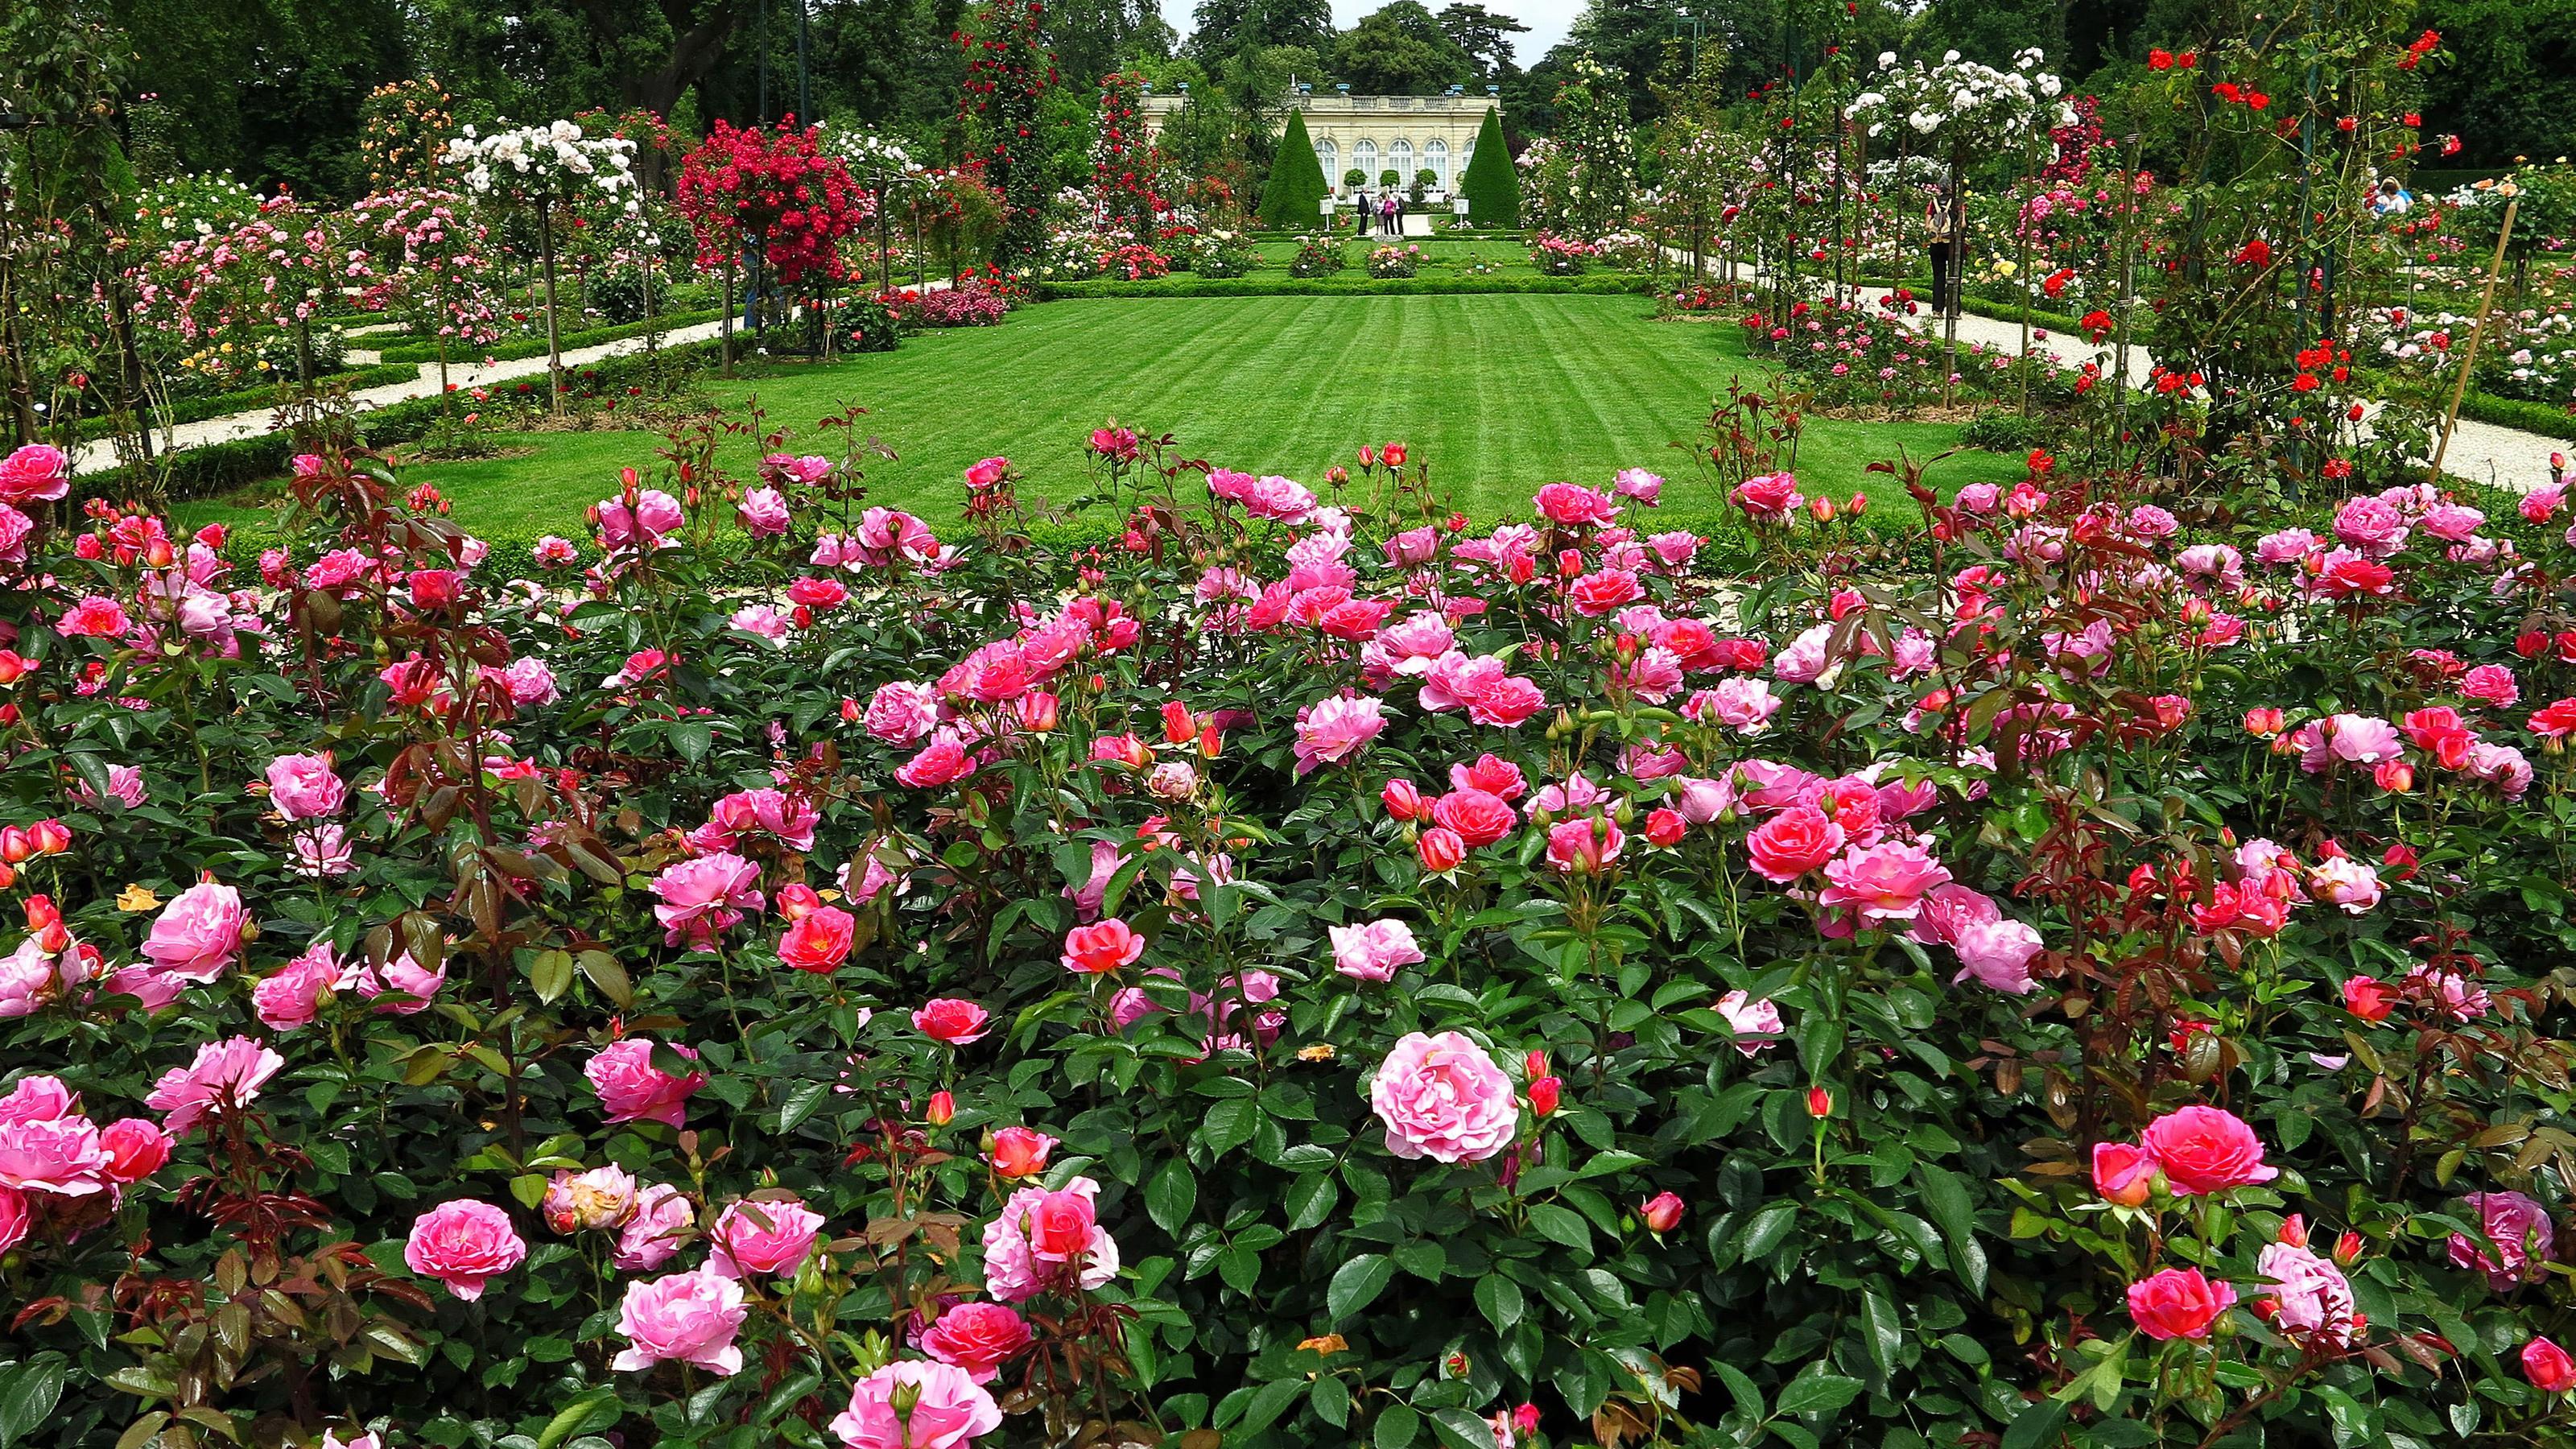 Best Pink roses bush in the garden Wallpaper (8 + Image)